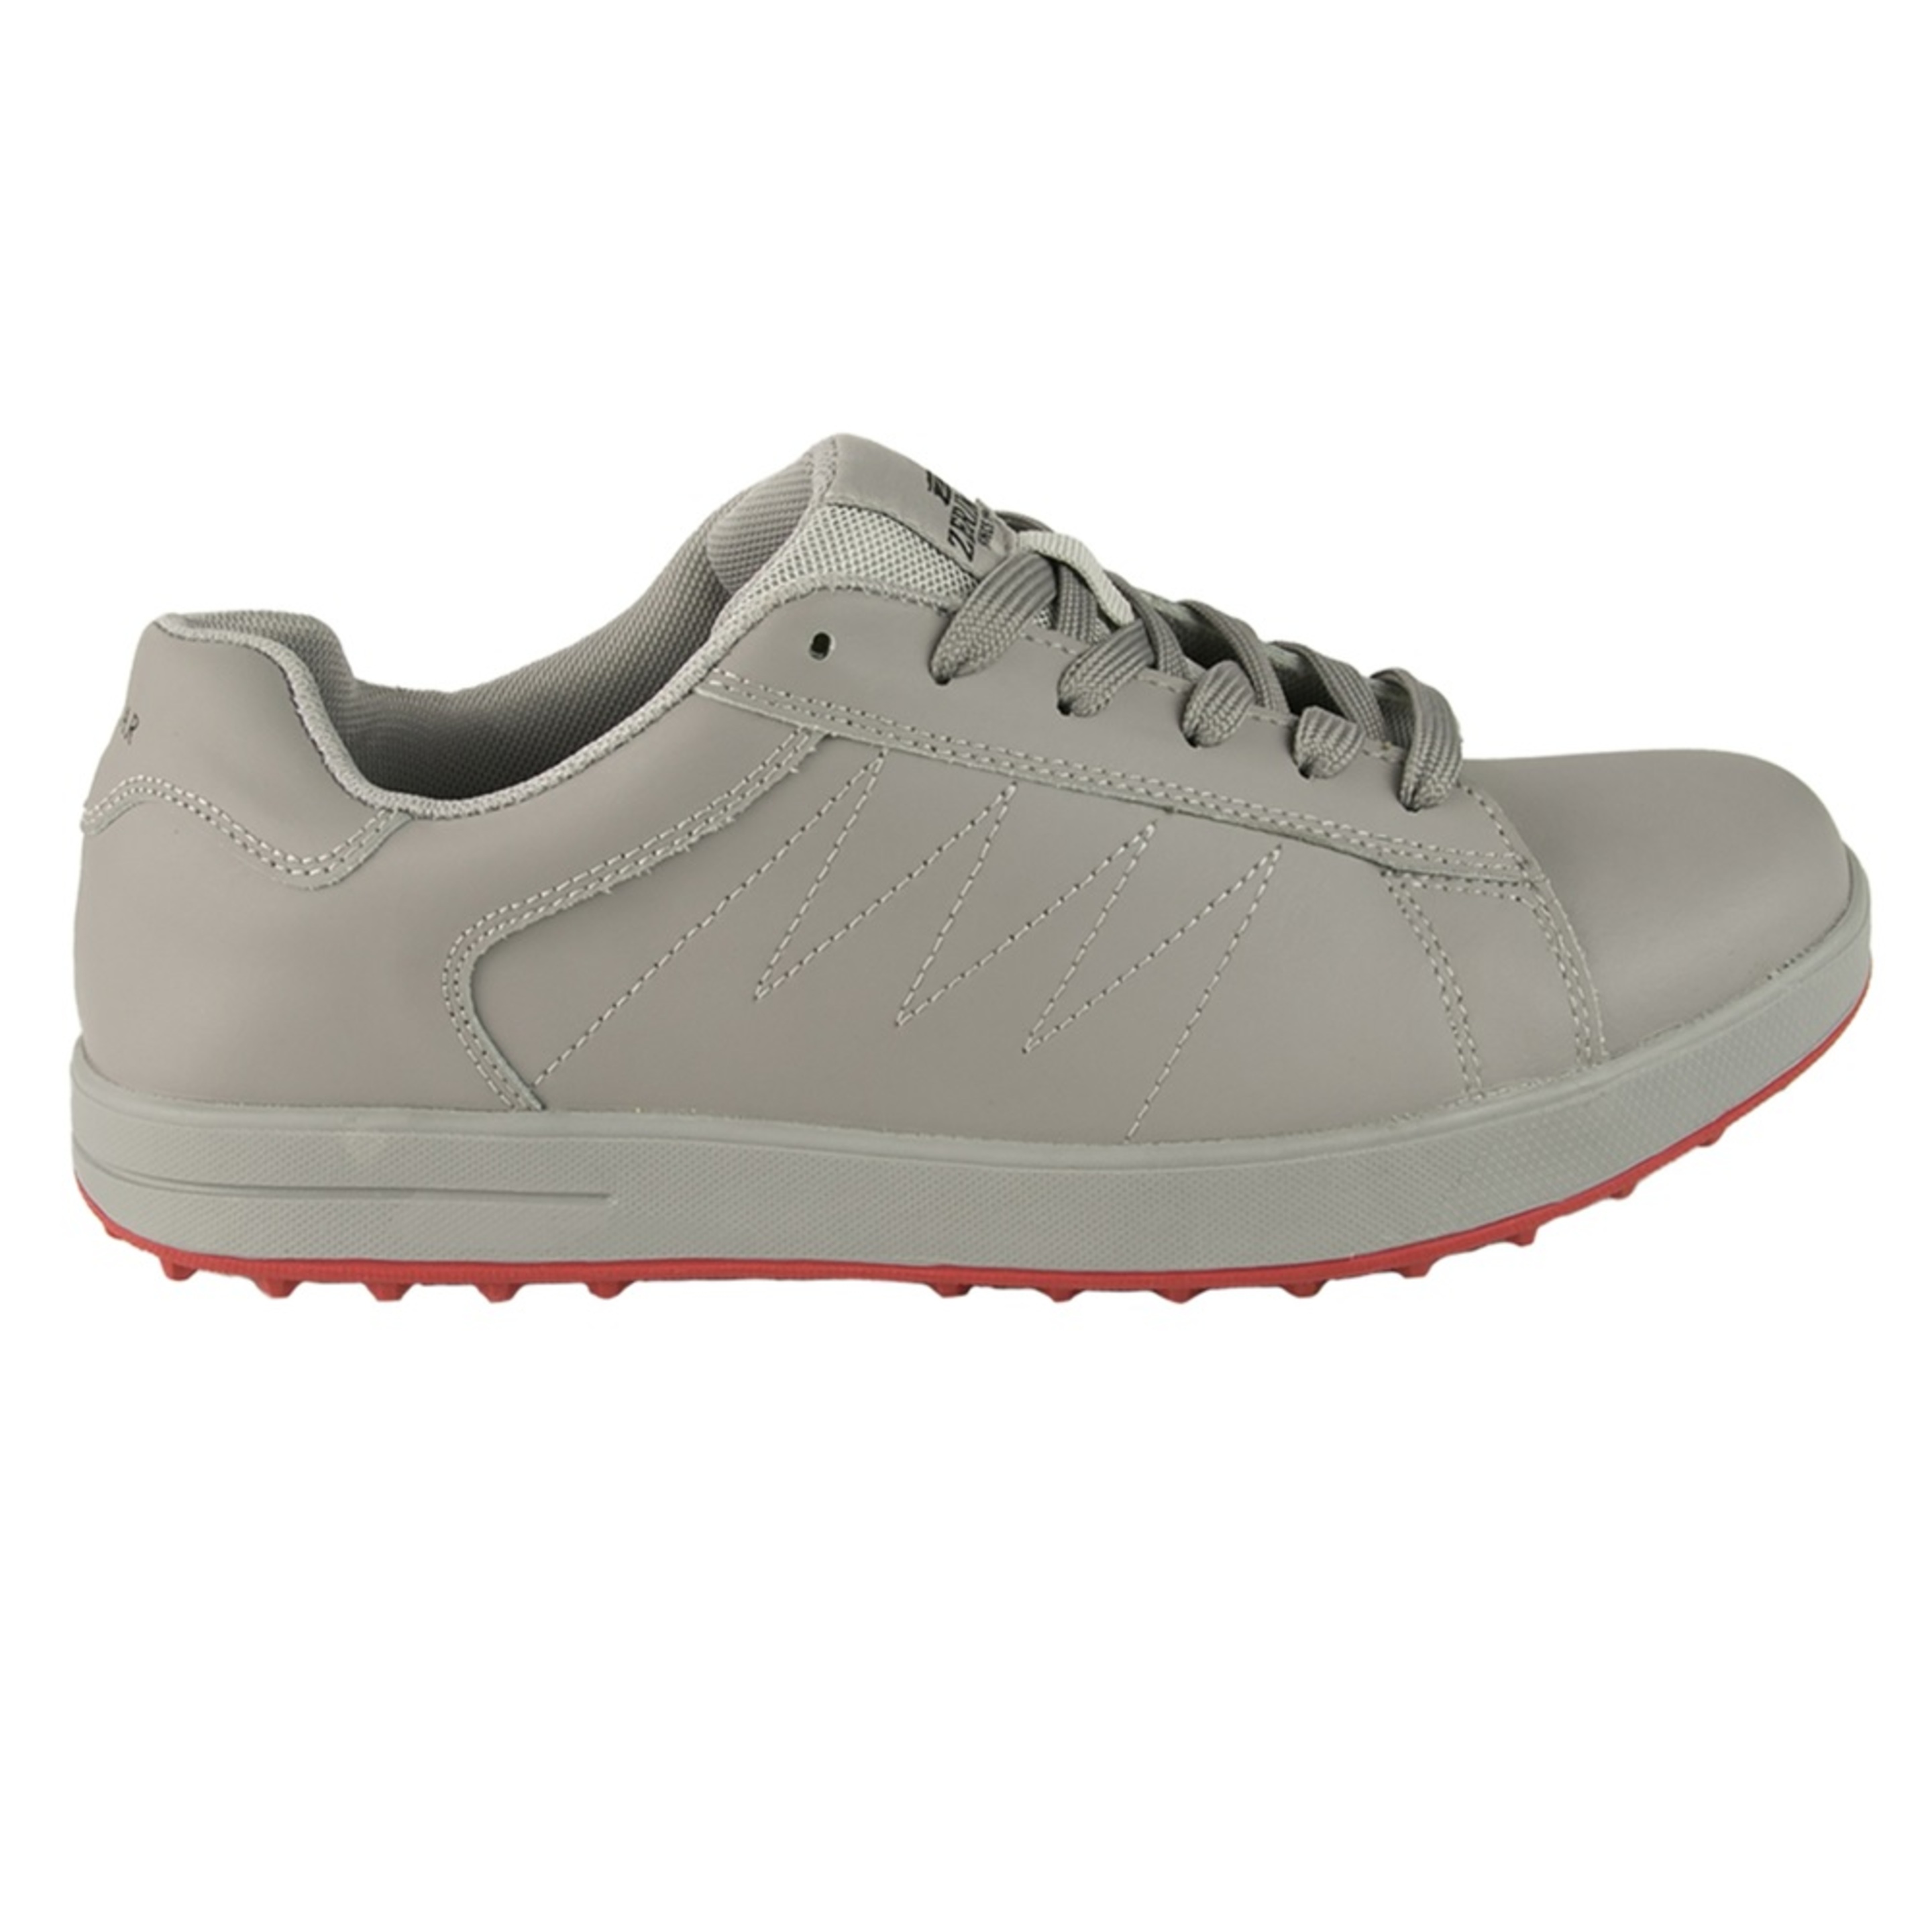 Zapatos De Golf Zerimar Gris Con Bordados - gris - 